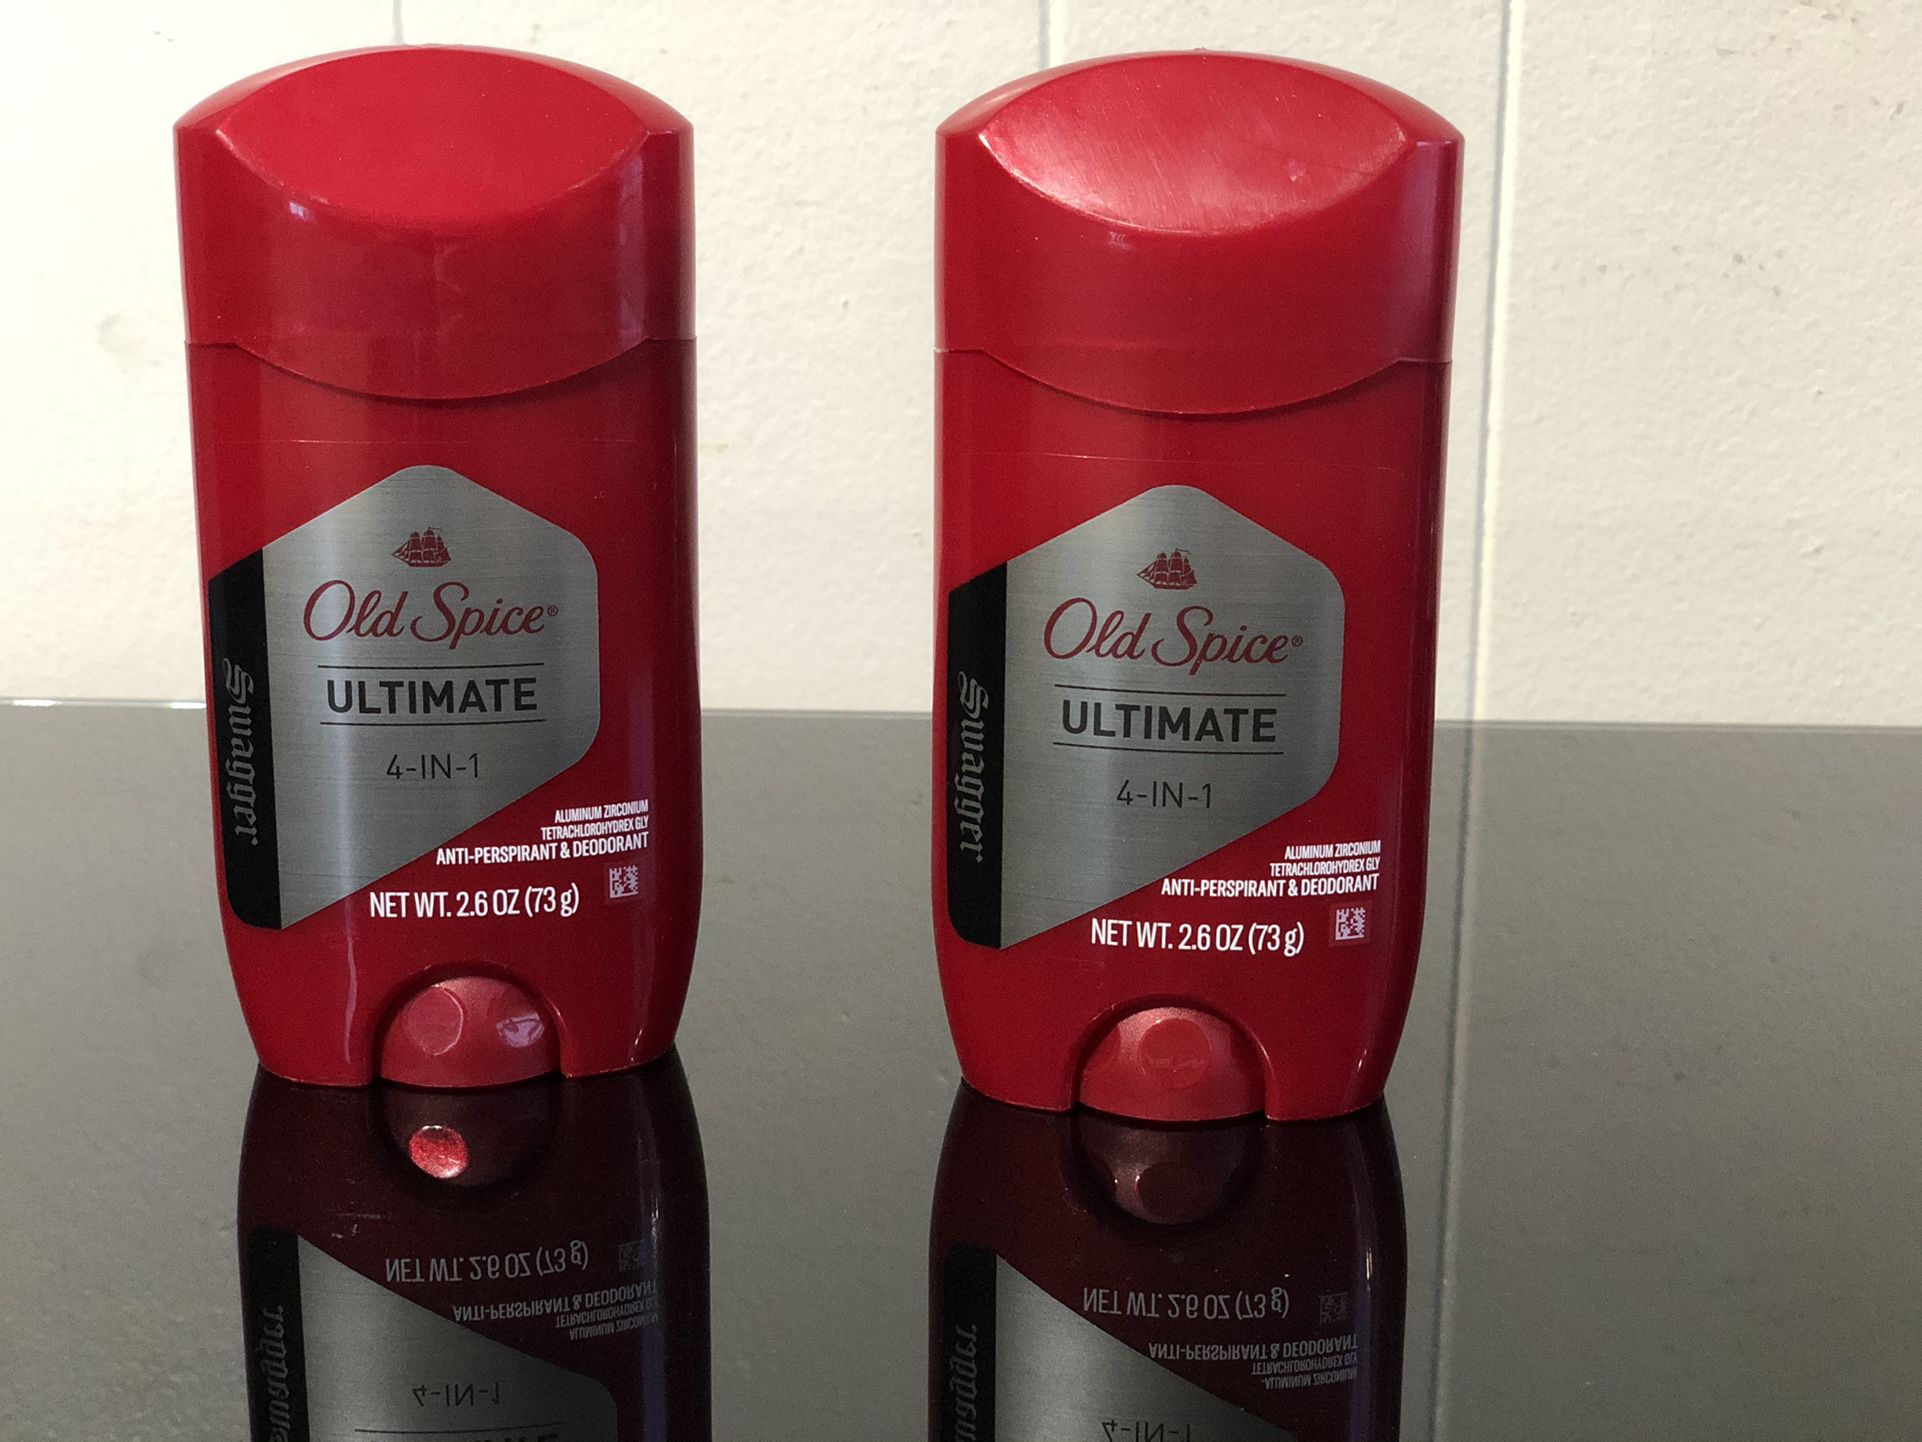 Old Spice Ultimate 4-In-1 Antiperspirant Deodorant, Swagger Scent, 2.6 oz, 